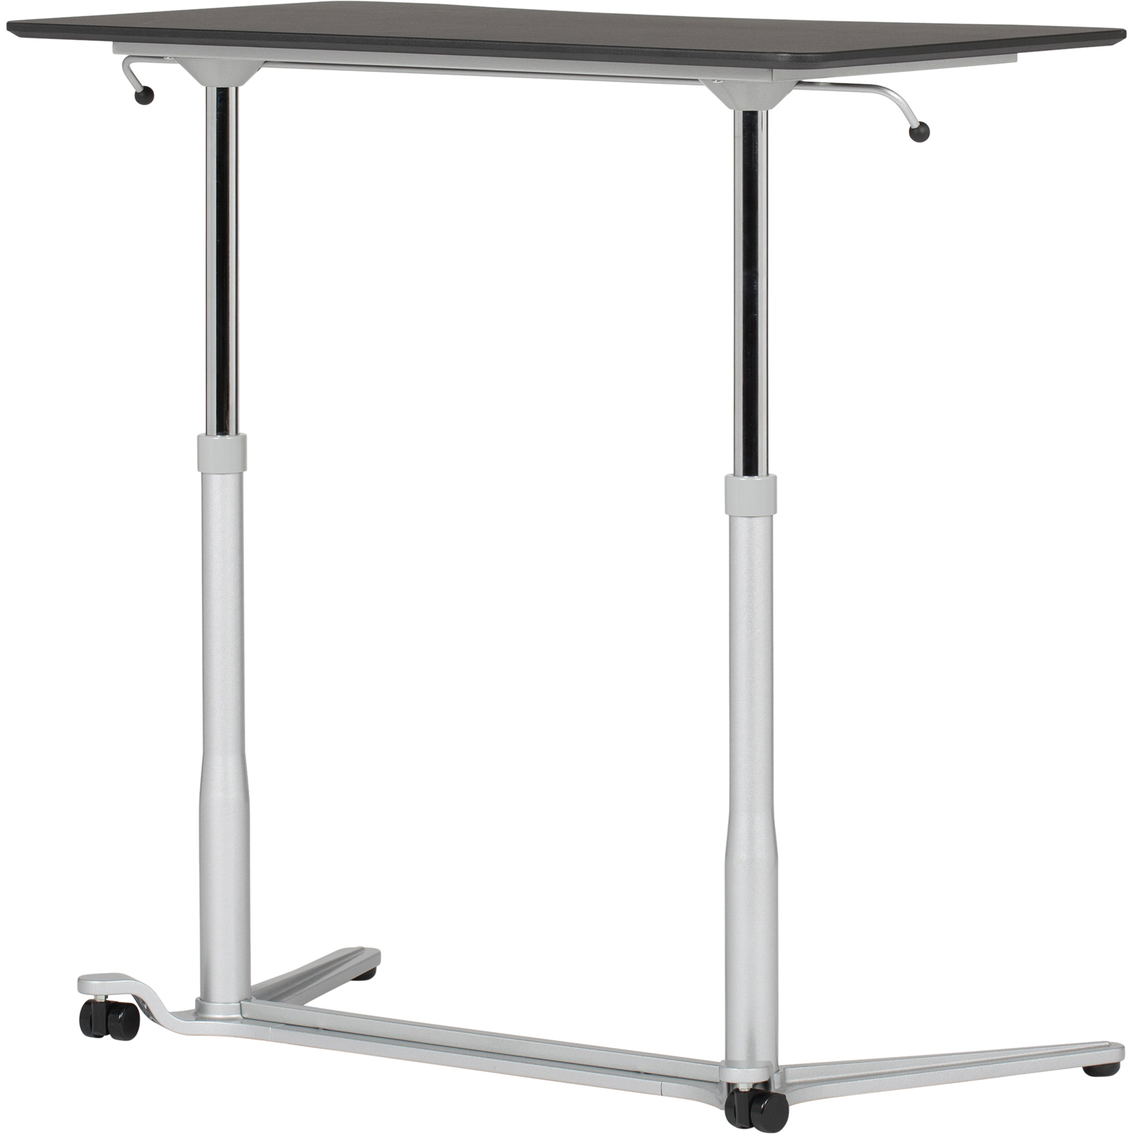 Calico Designs Sierra Adjustable Height Desk - Image 2 of 9